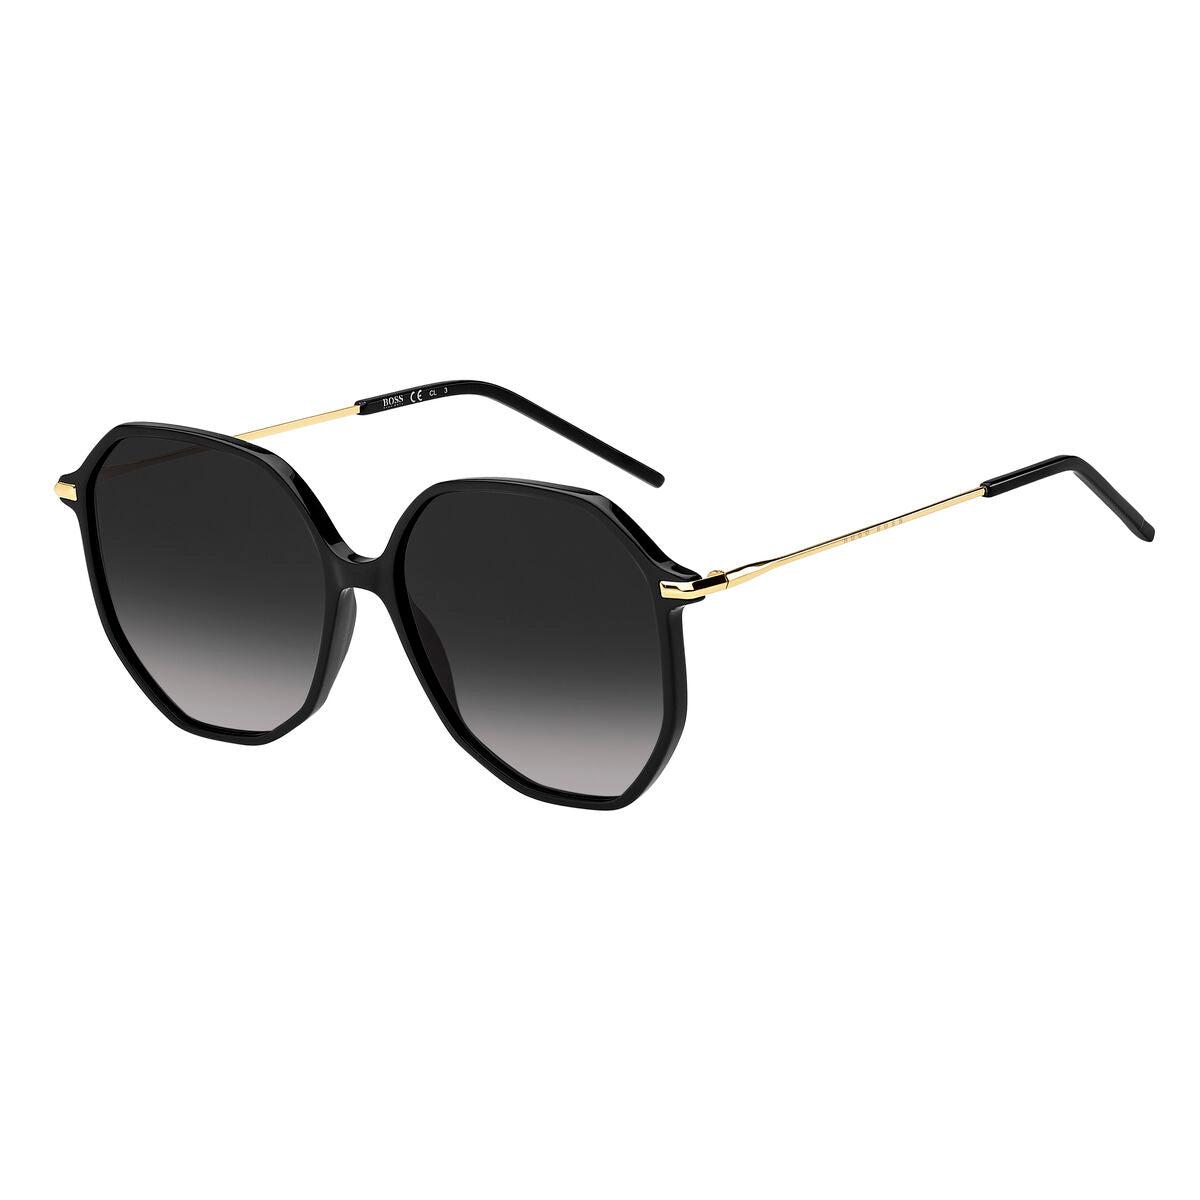 BOSS by HUGO BOSS Ladies' Sunglasses Boss-1329-s-807-9o in Black | Lyst